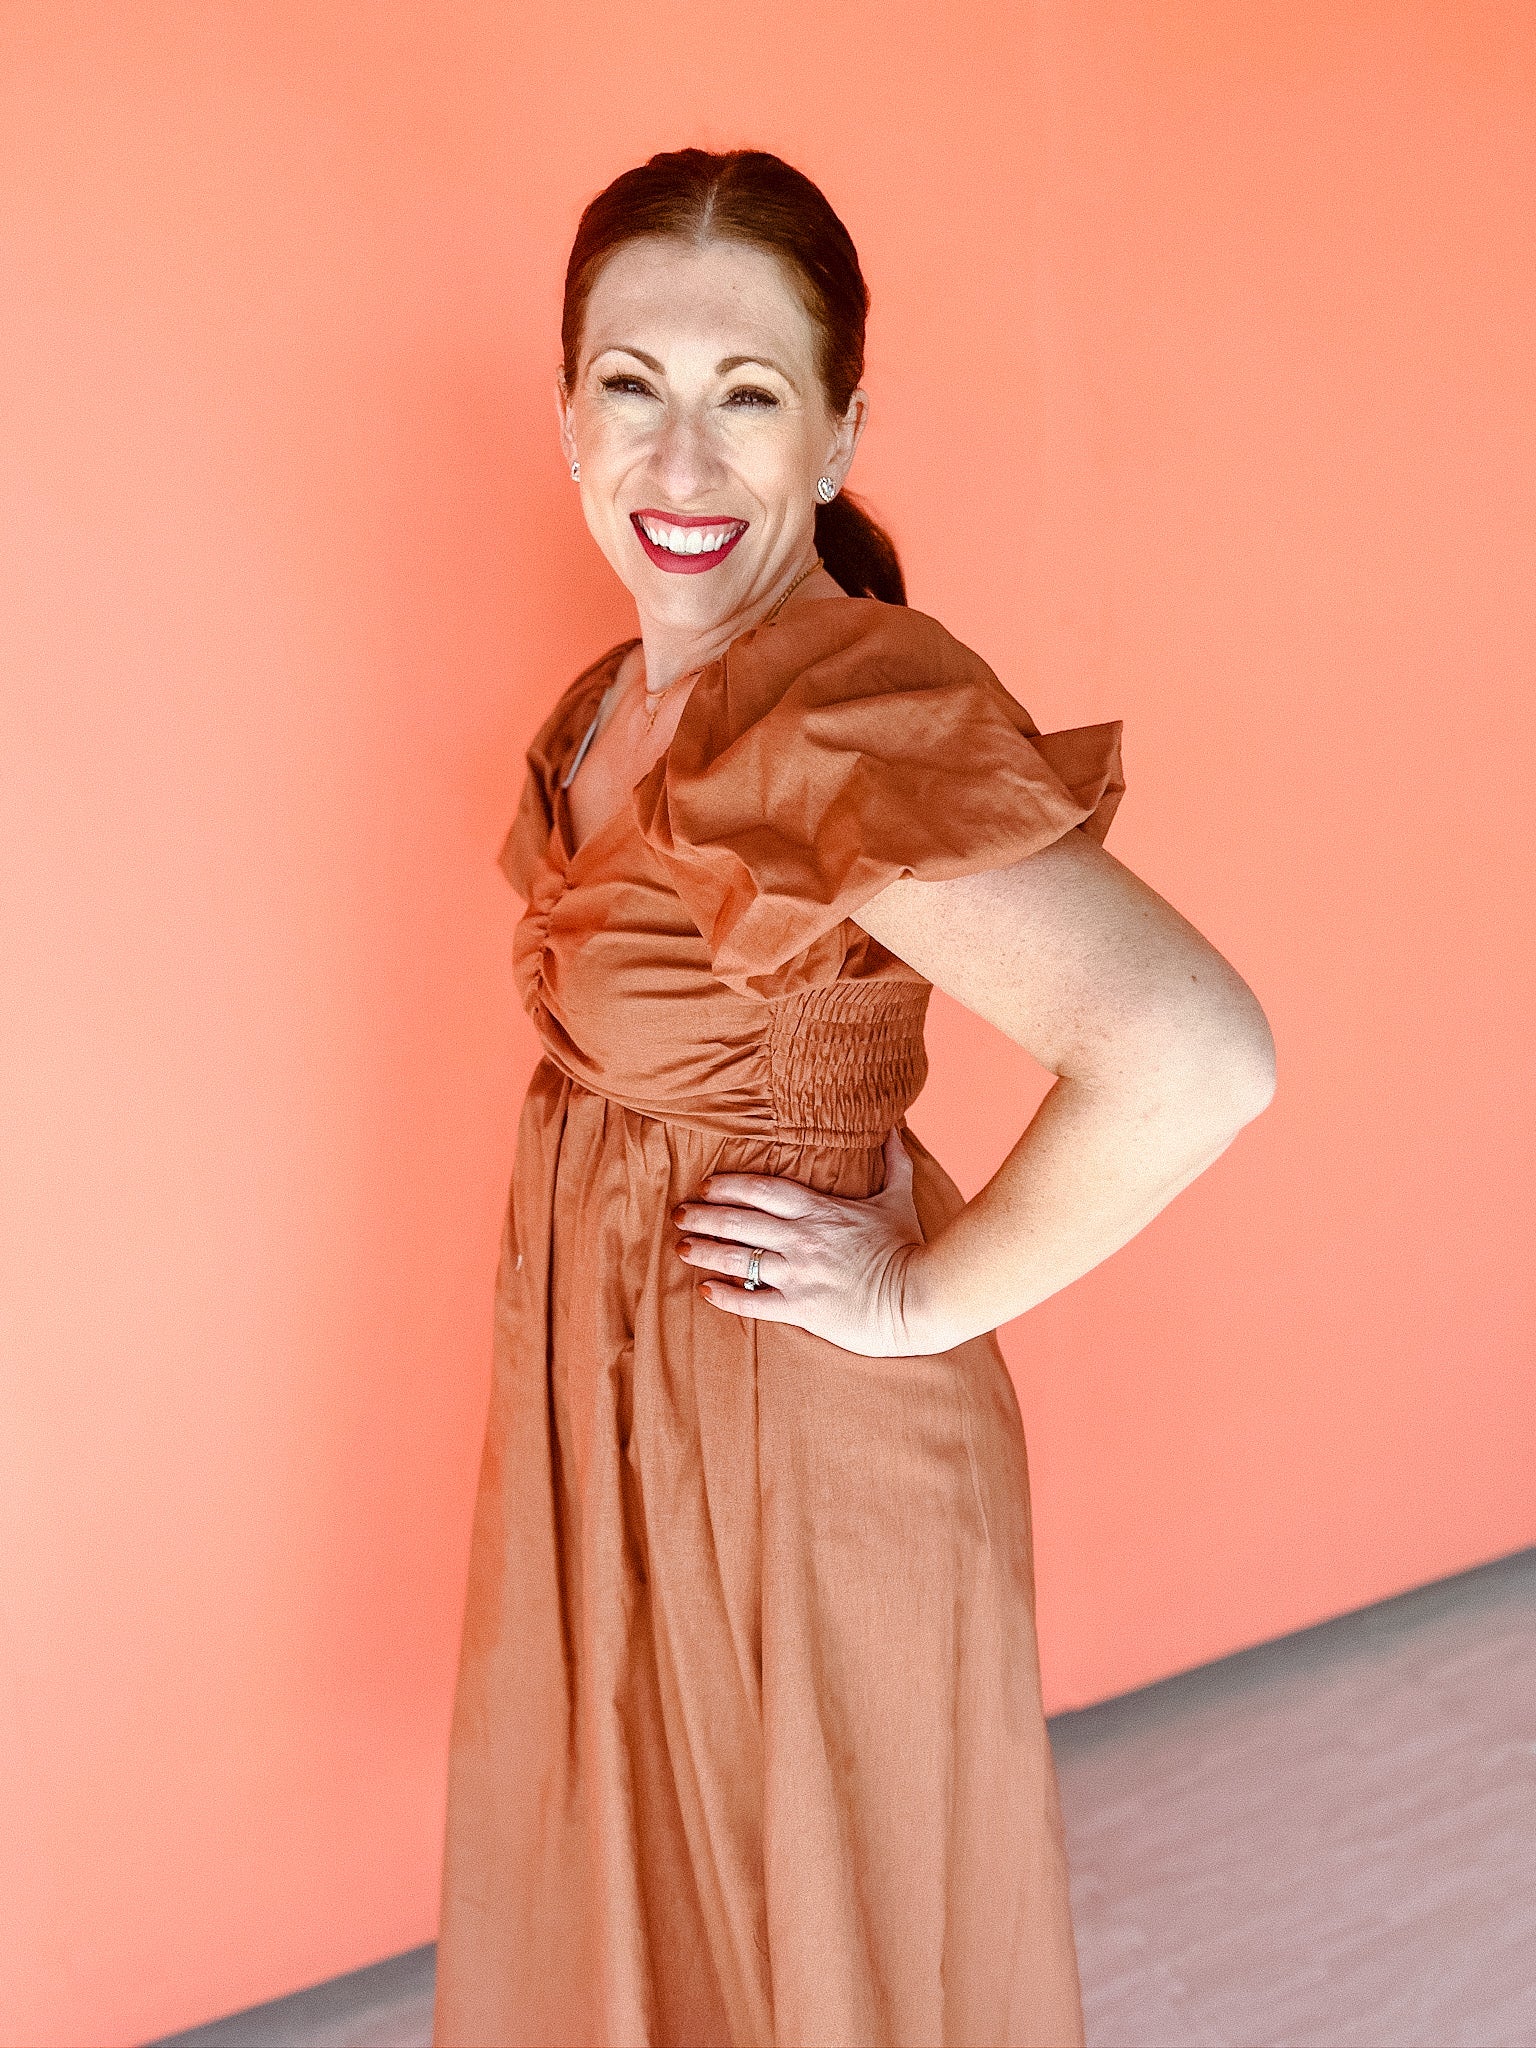 Nicole Puff Sleeve Dress - Rust Brown